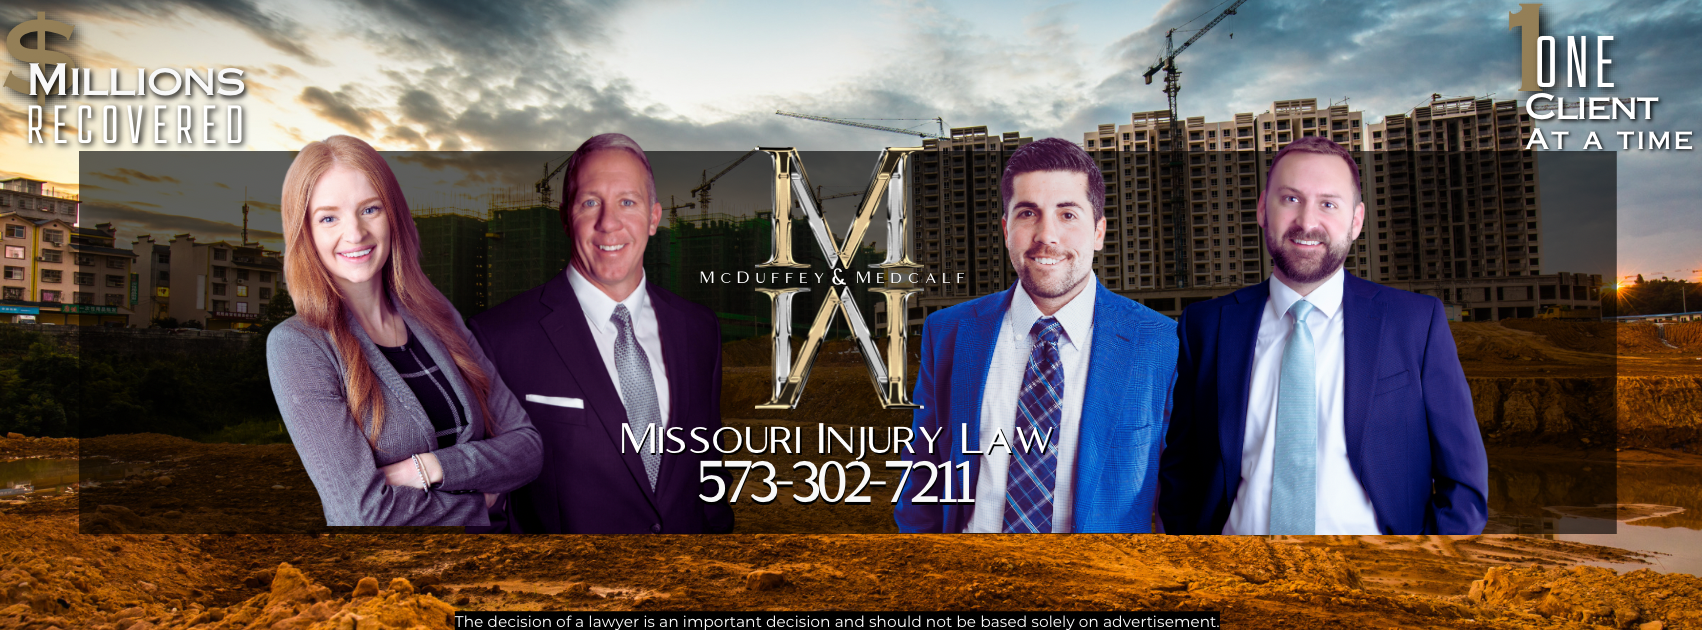 McDuffey & Medcalf, LLC-Injury Lawyers